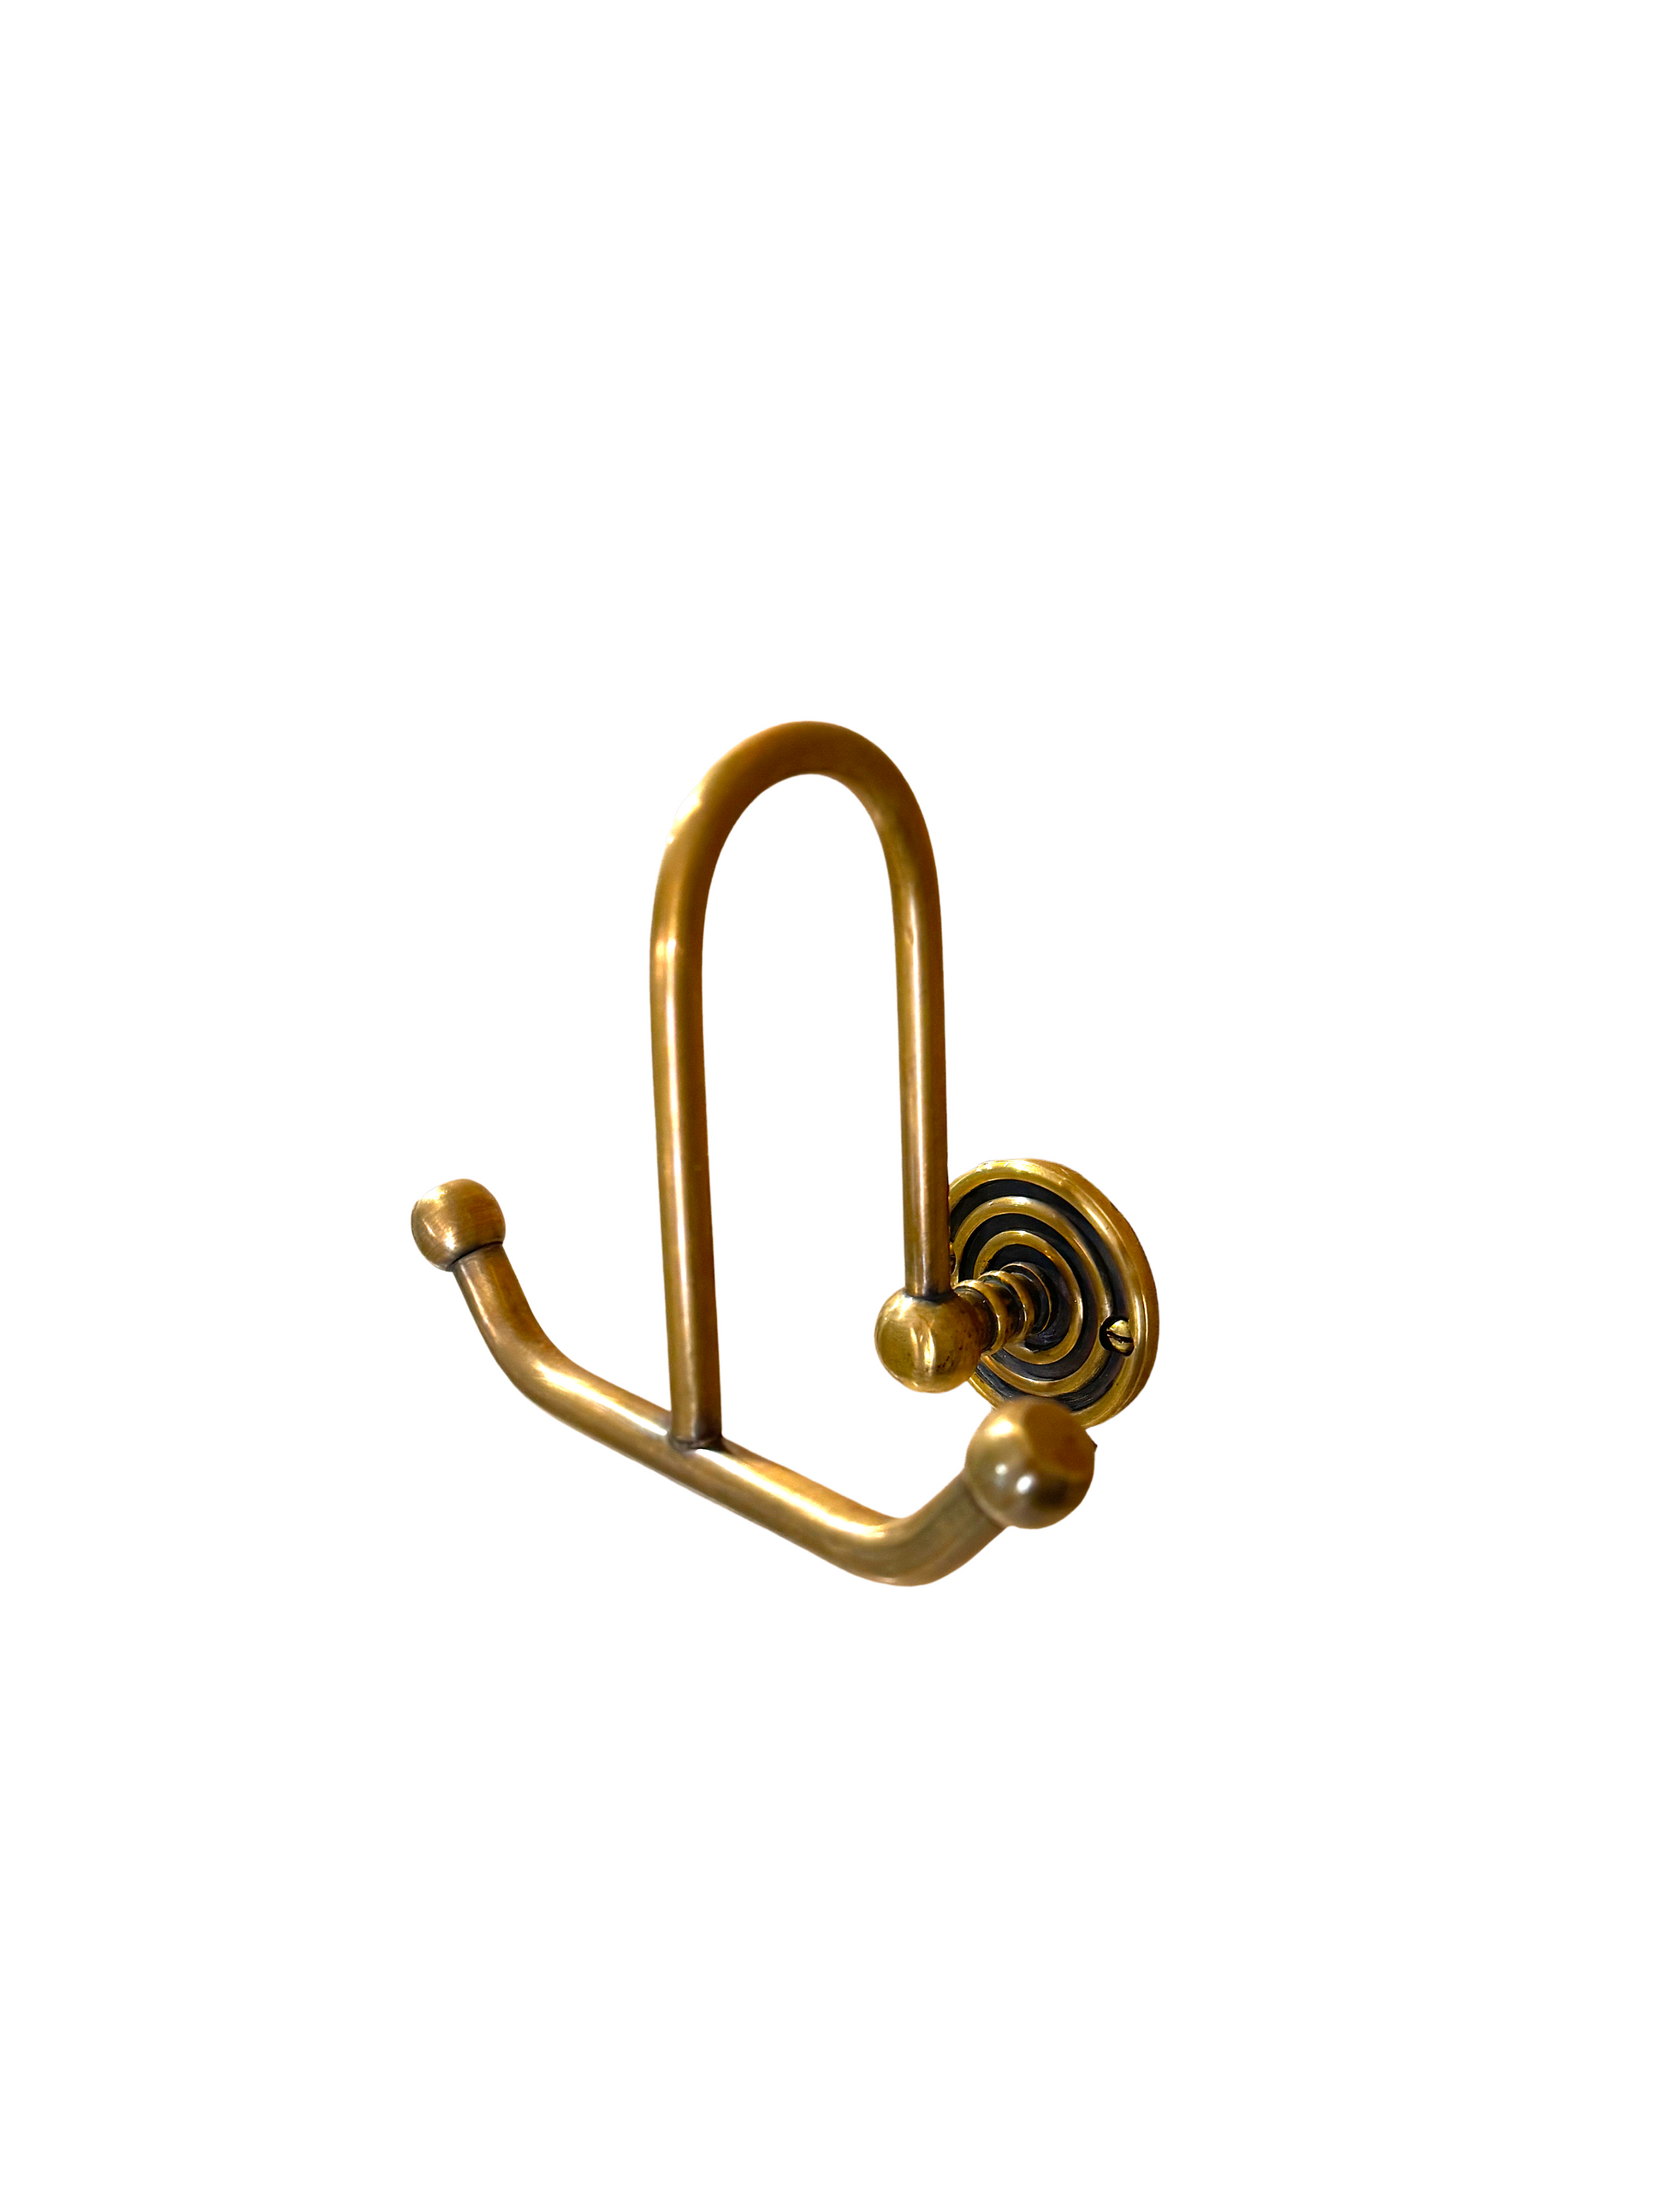 Double Hook Polished Brass 5 Pack ǀ Hardware & Locks ǀ Today's